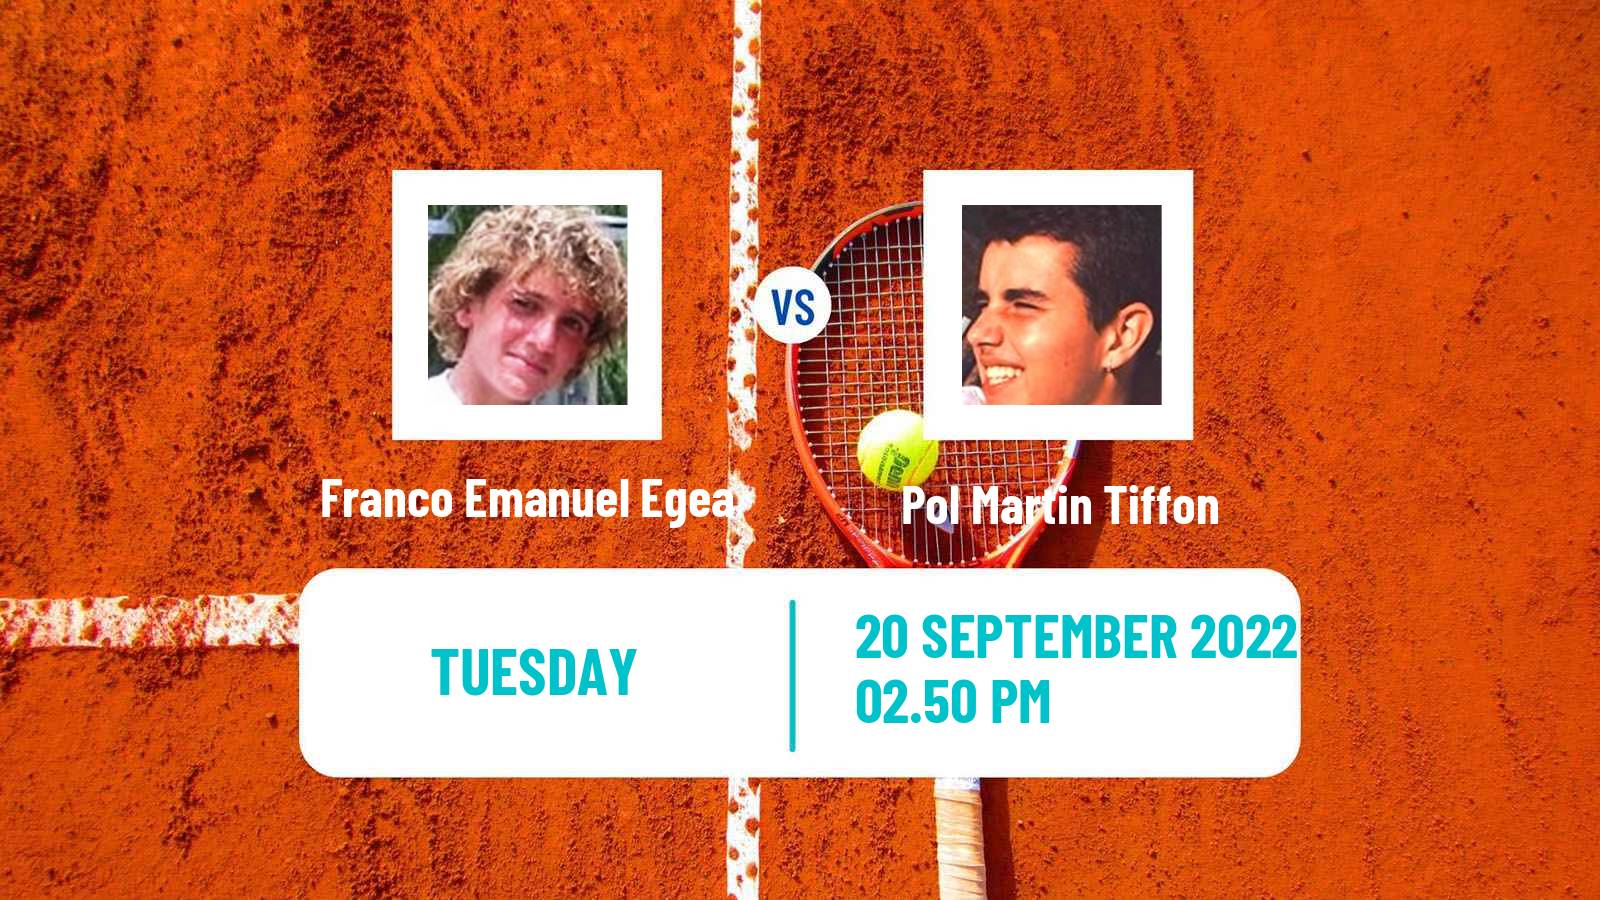 Tennis ATP Challenger Franco Emanuel Egea - Pol Martin Tiffon